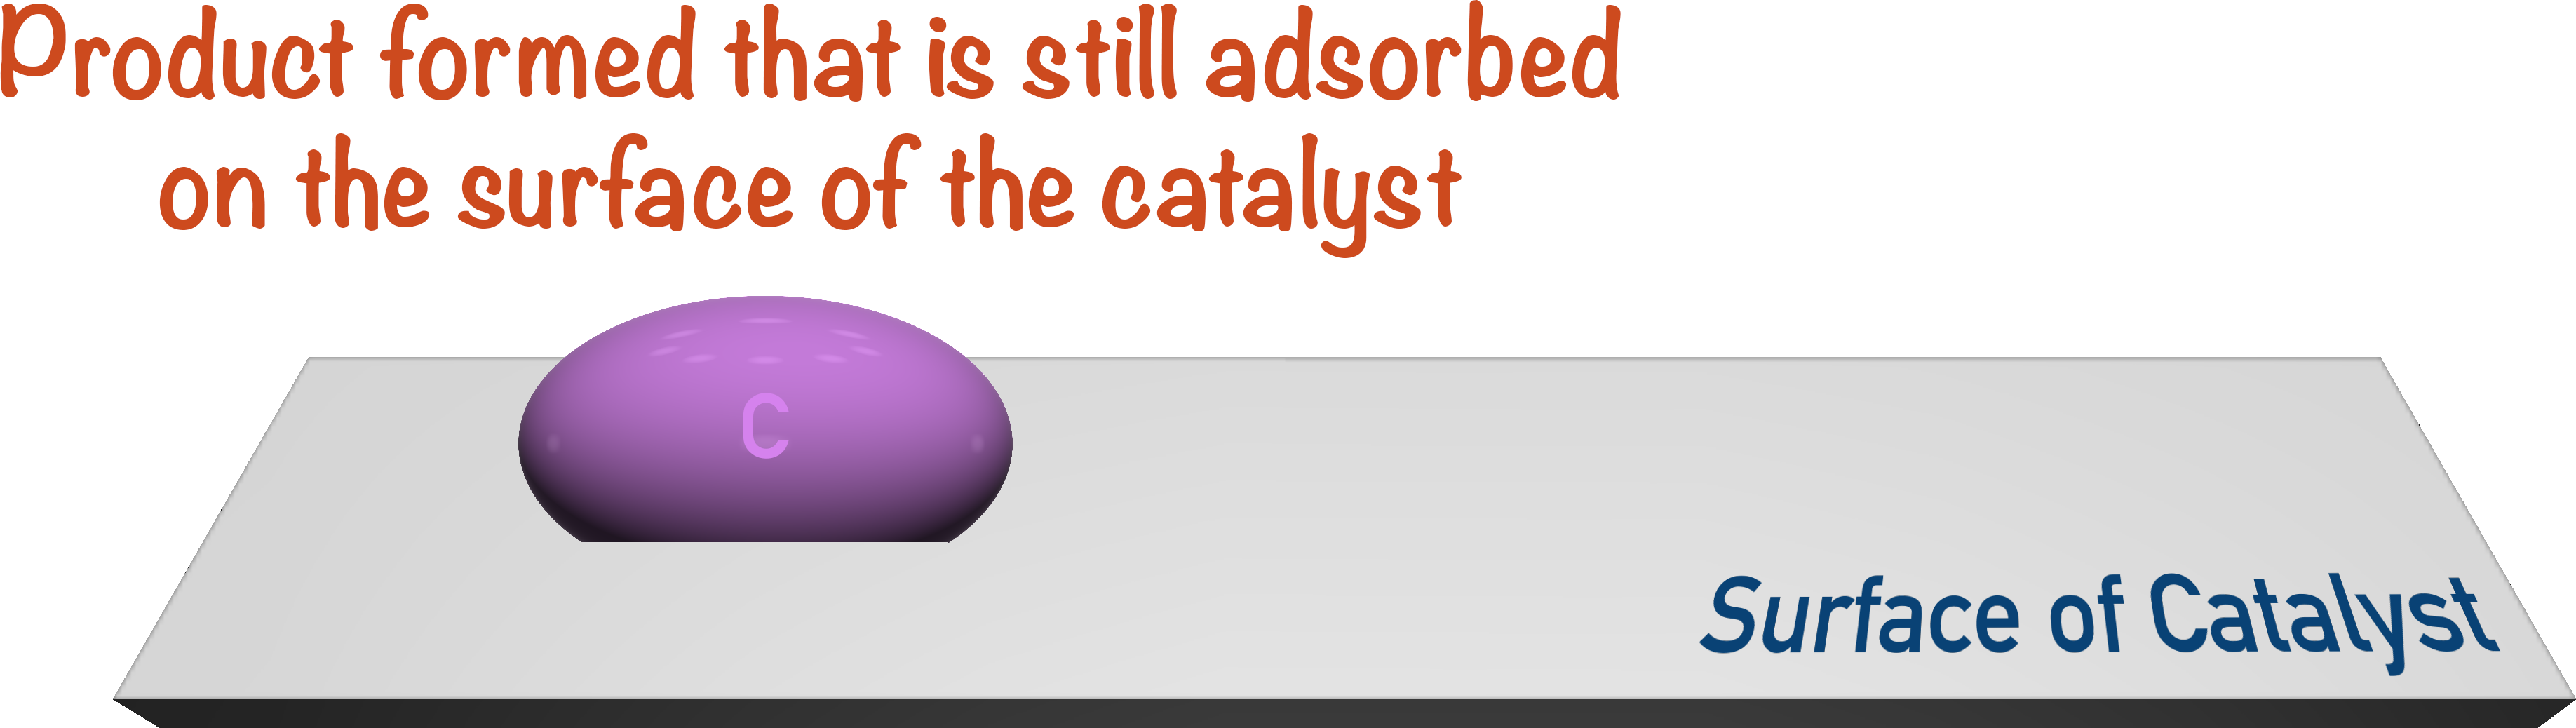 heterogeneous catalysis products catalyst